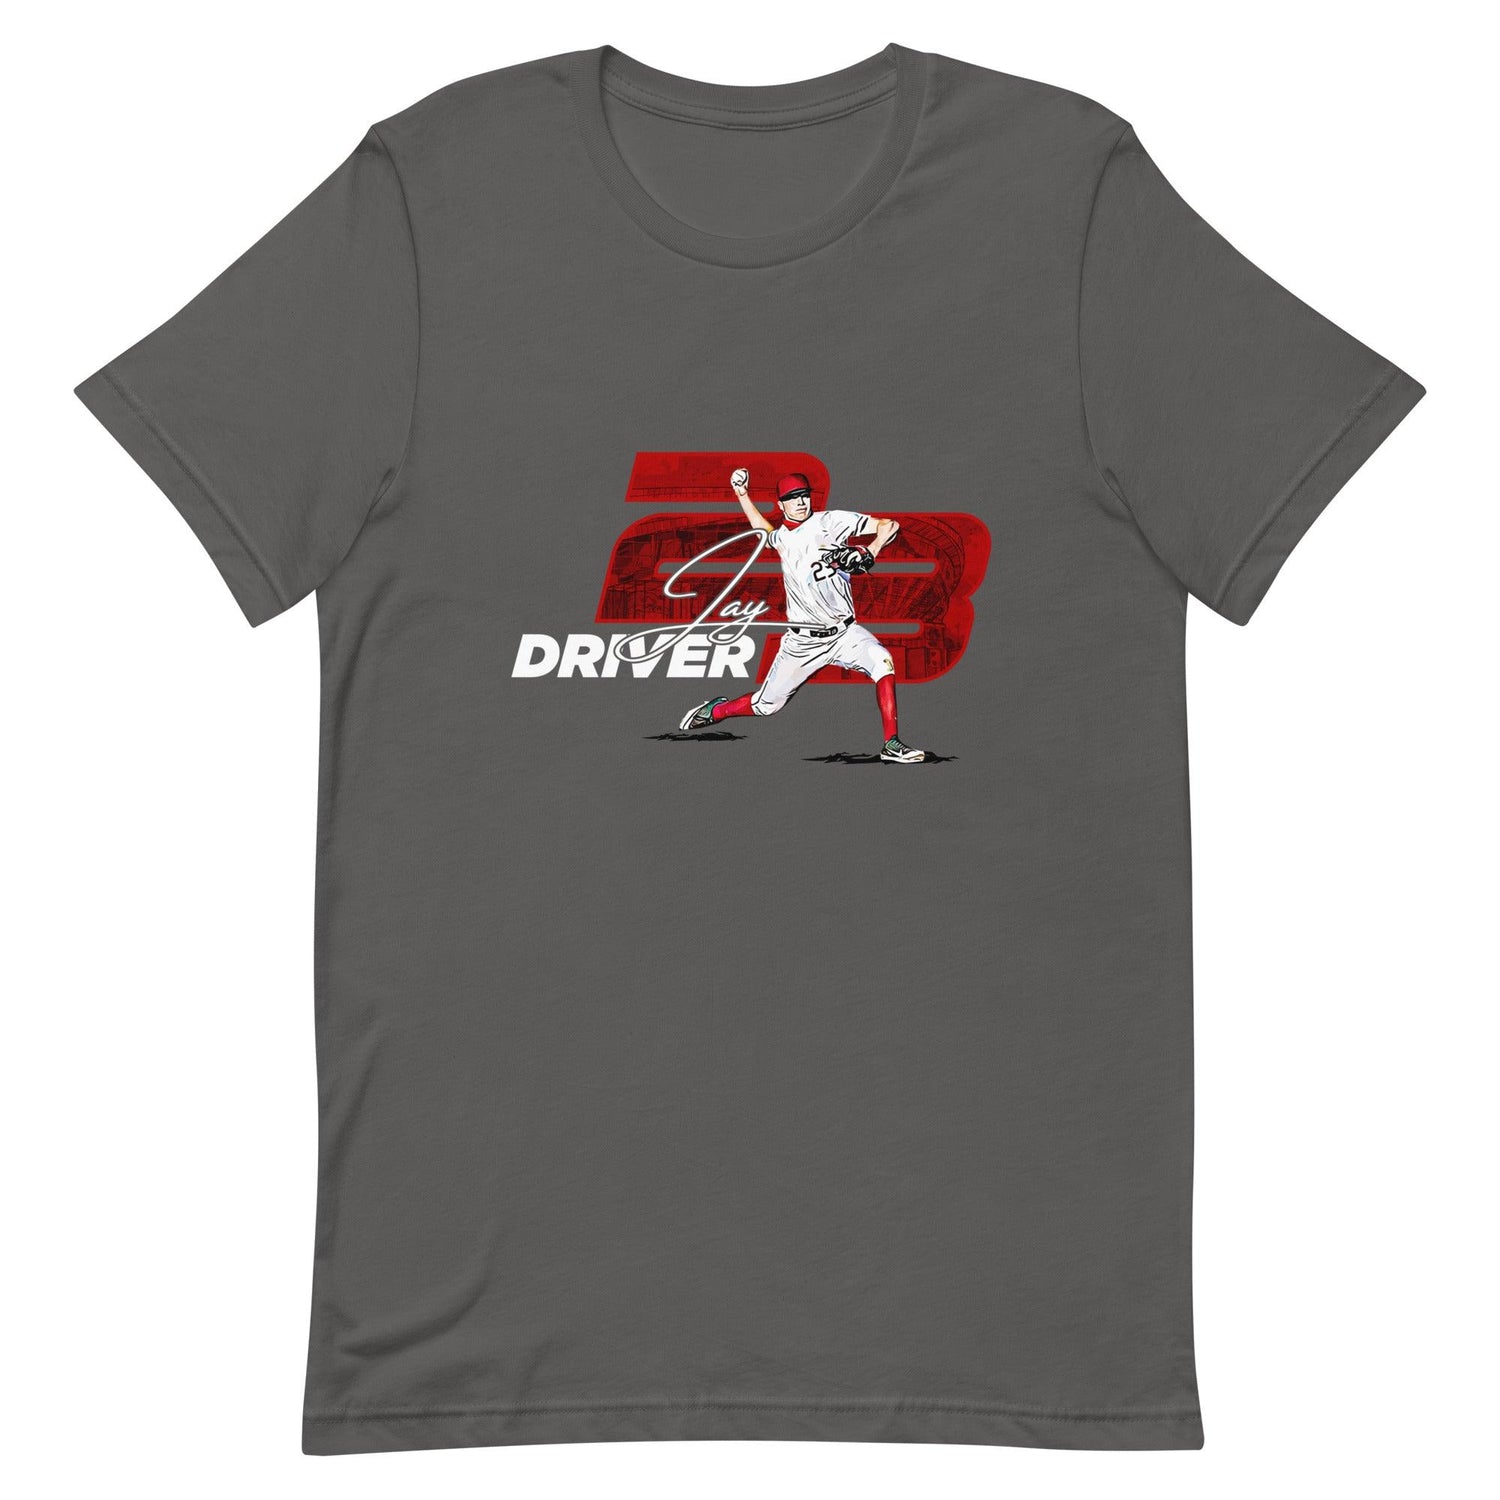 Jay Driver “Essential” t-shirt - Fan Arch